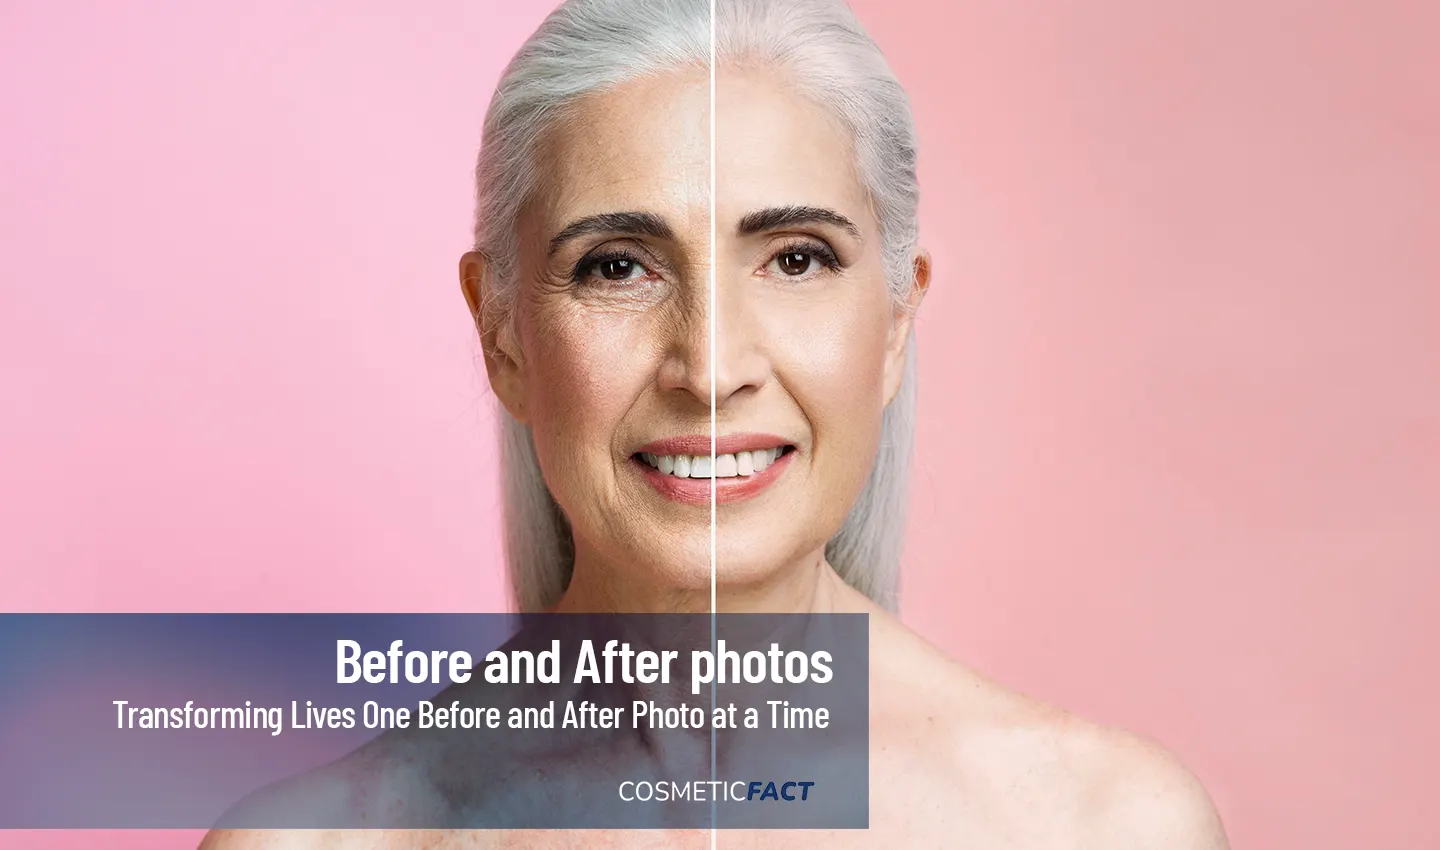 Displaying transformation through power of facelift photos